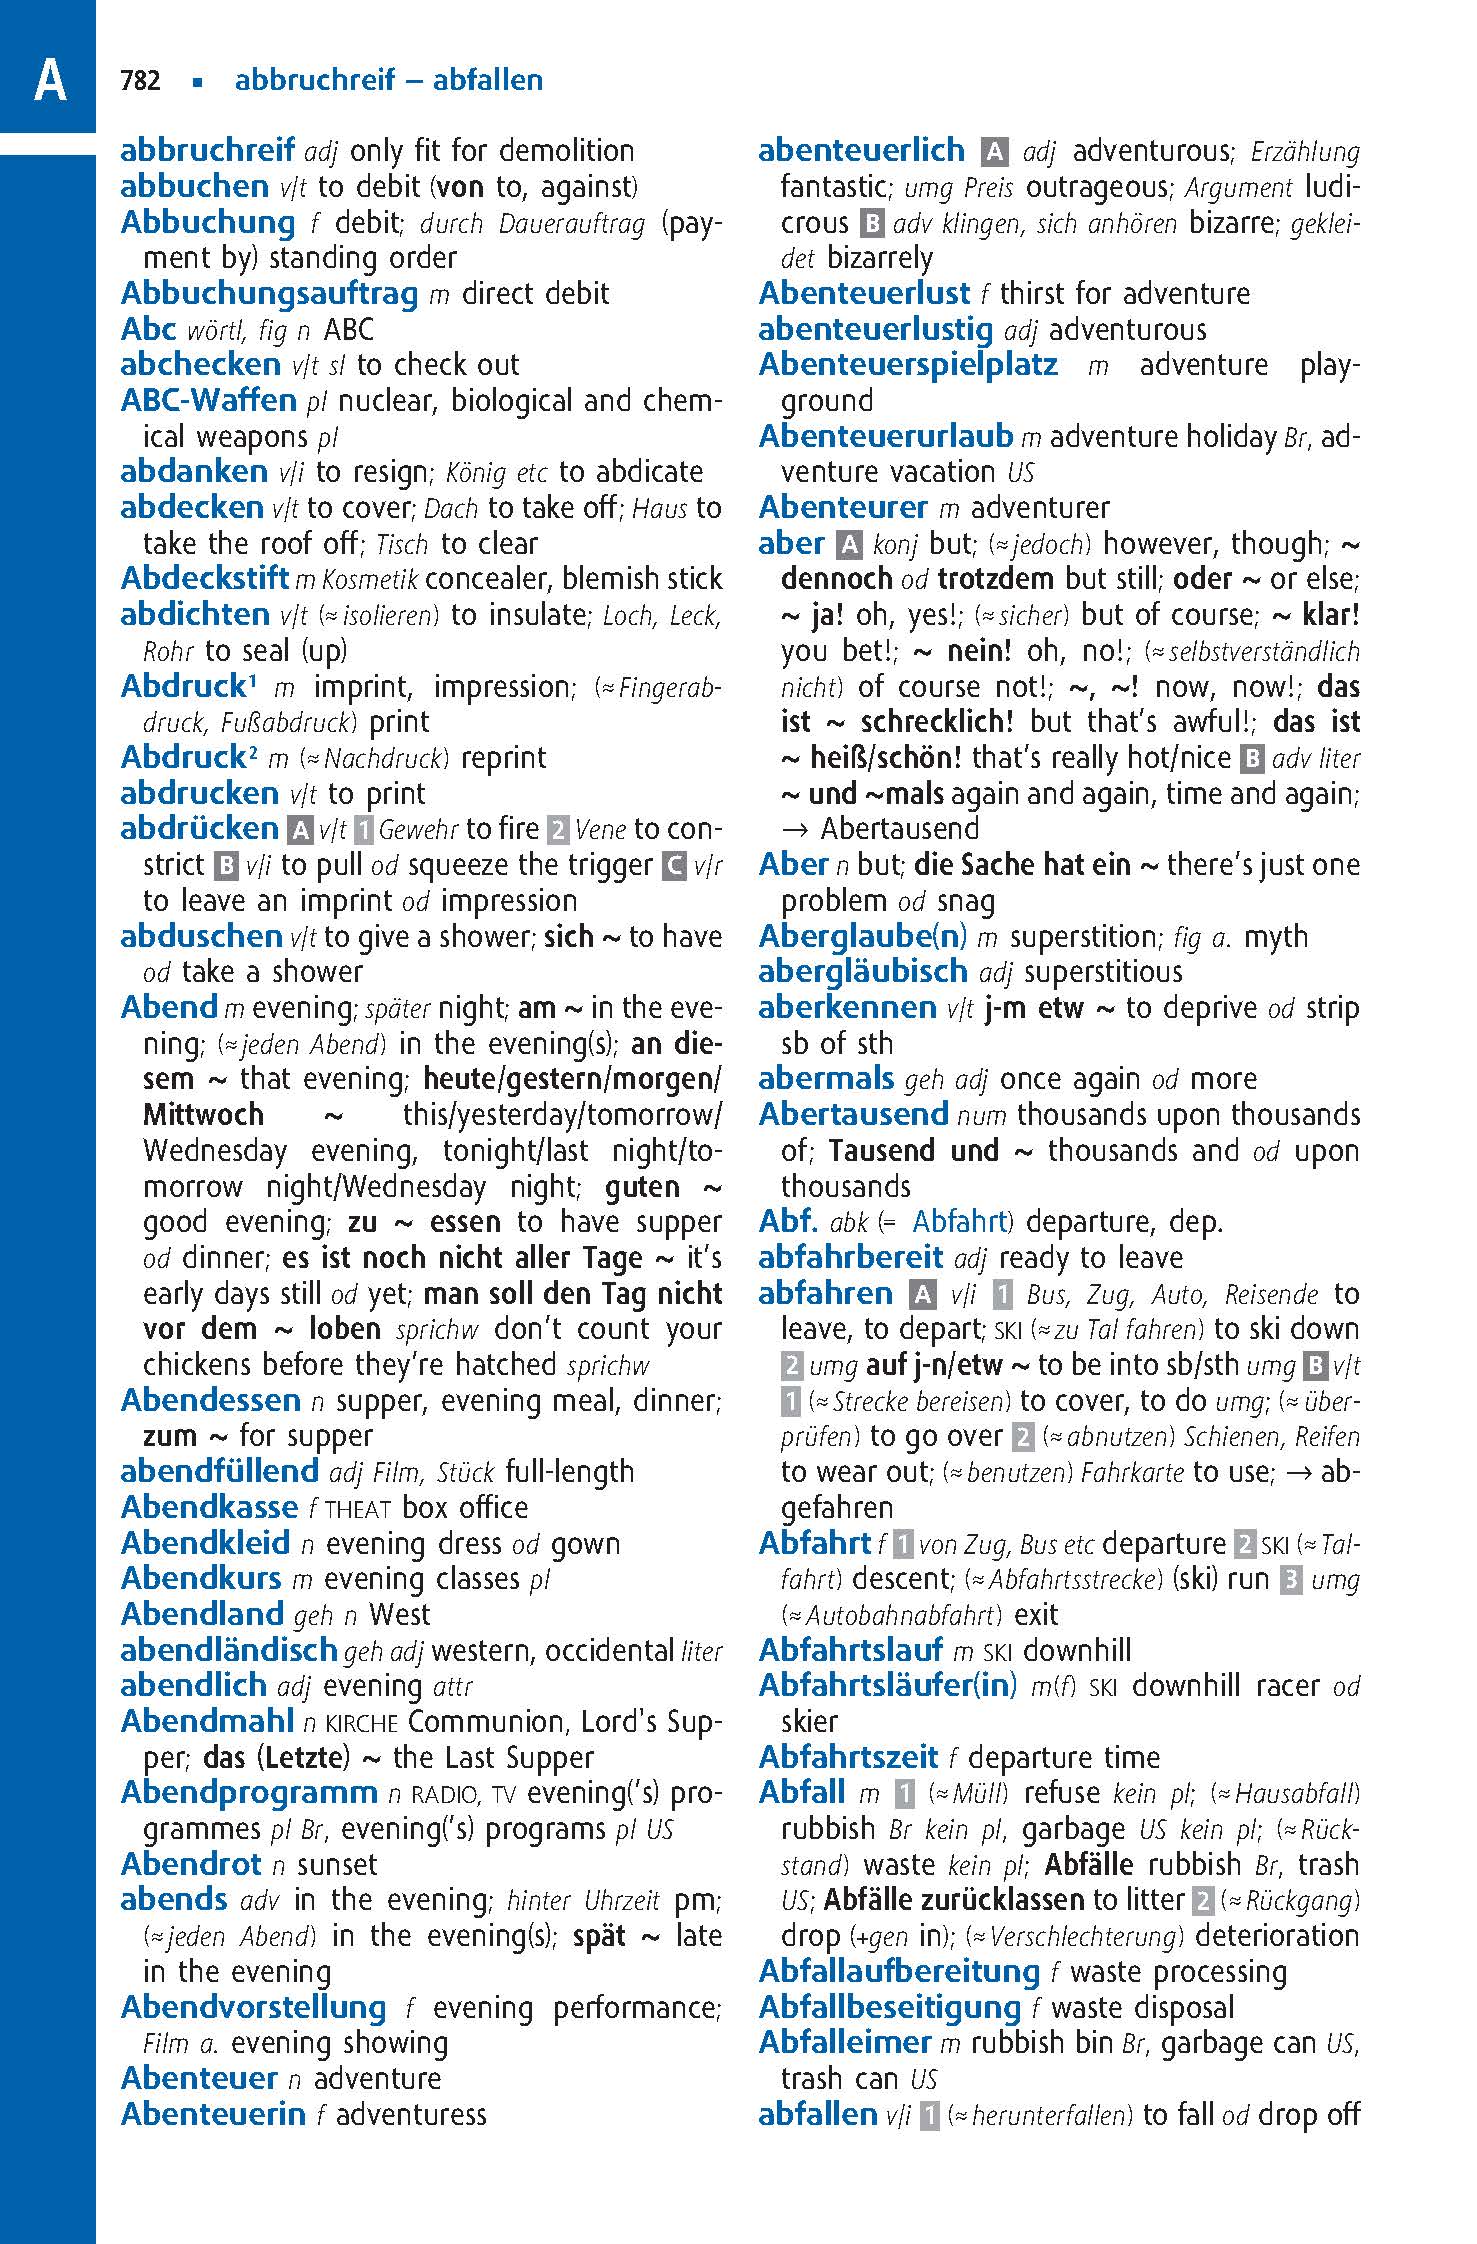 Langenscheidt Matura-Wörterbuch Englisch